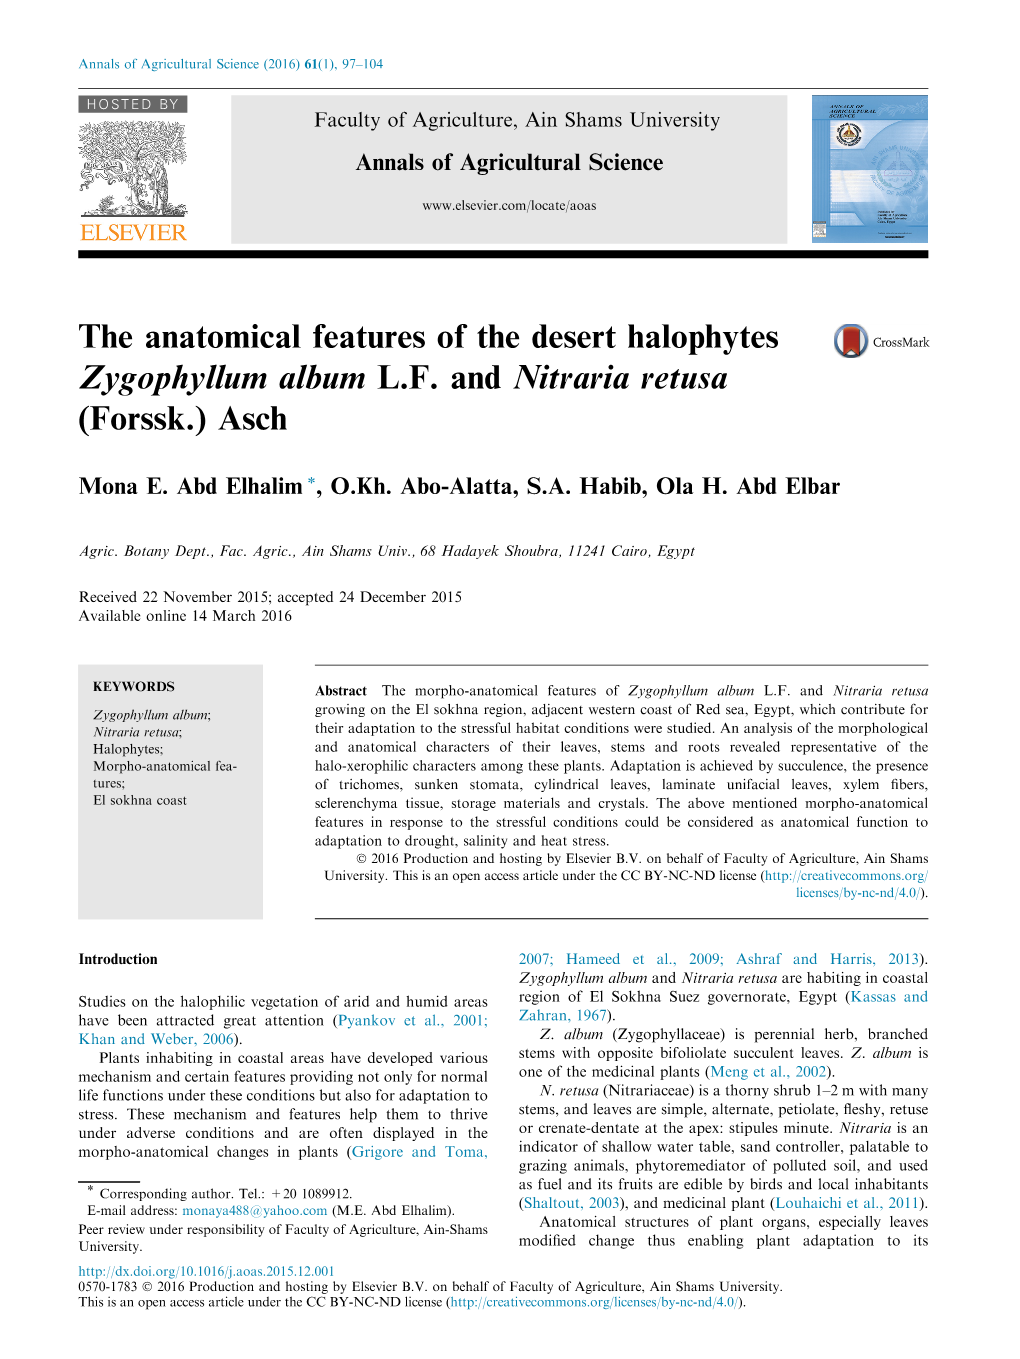 The Anatomical Features of the Desert Halophytes Zygophyllum Album L.F. and Nitraria Retusa (Forssk.) Asch